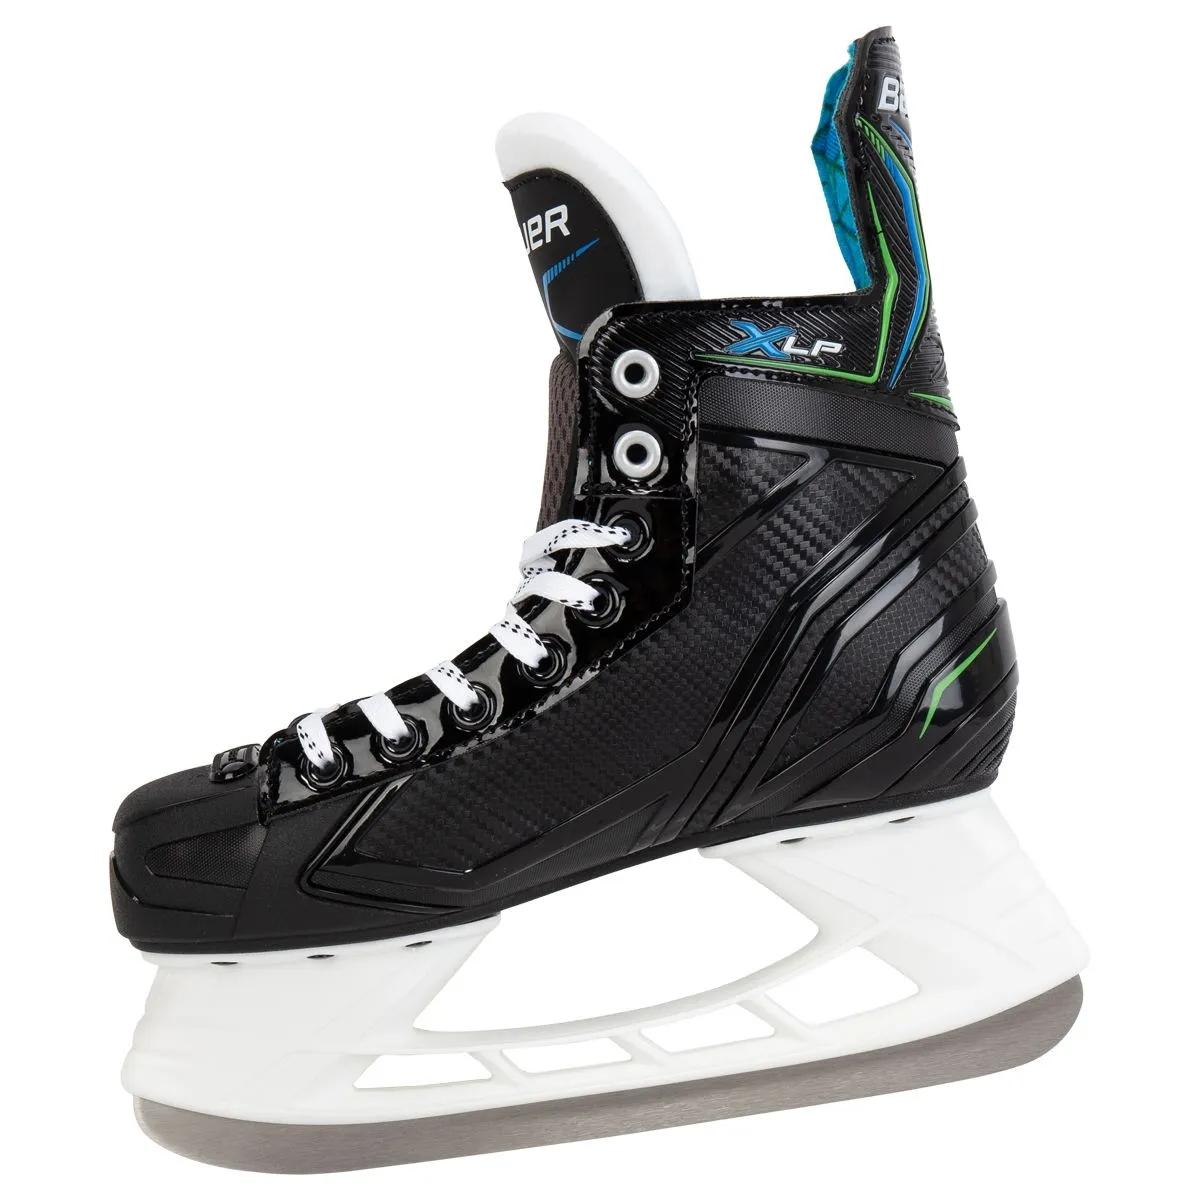 Bauer X-LP Jr. Hockey Skatesproduct zoom image #7